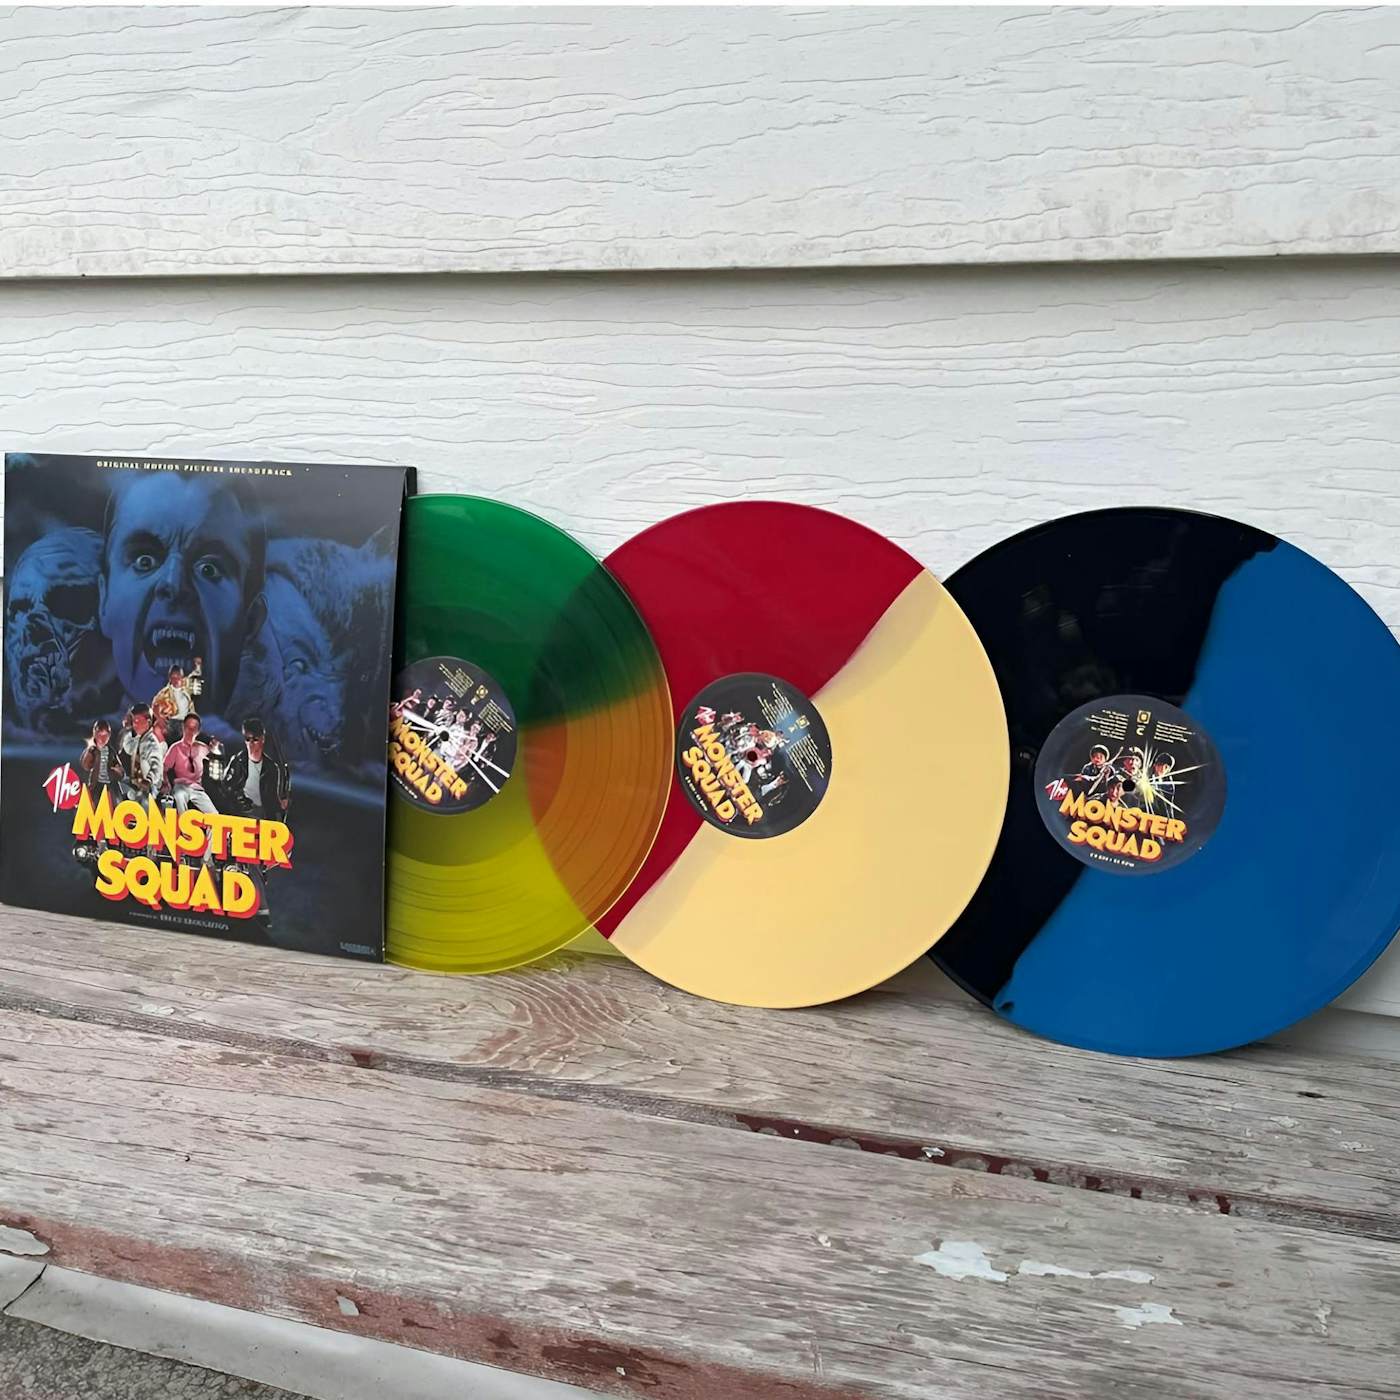 Bruce Broughton Monster Squad Original Soundtrack (Definitive Edition/Colored/3LP) Vinyl Record